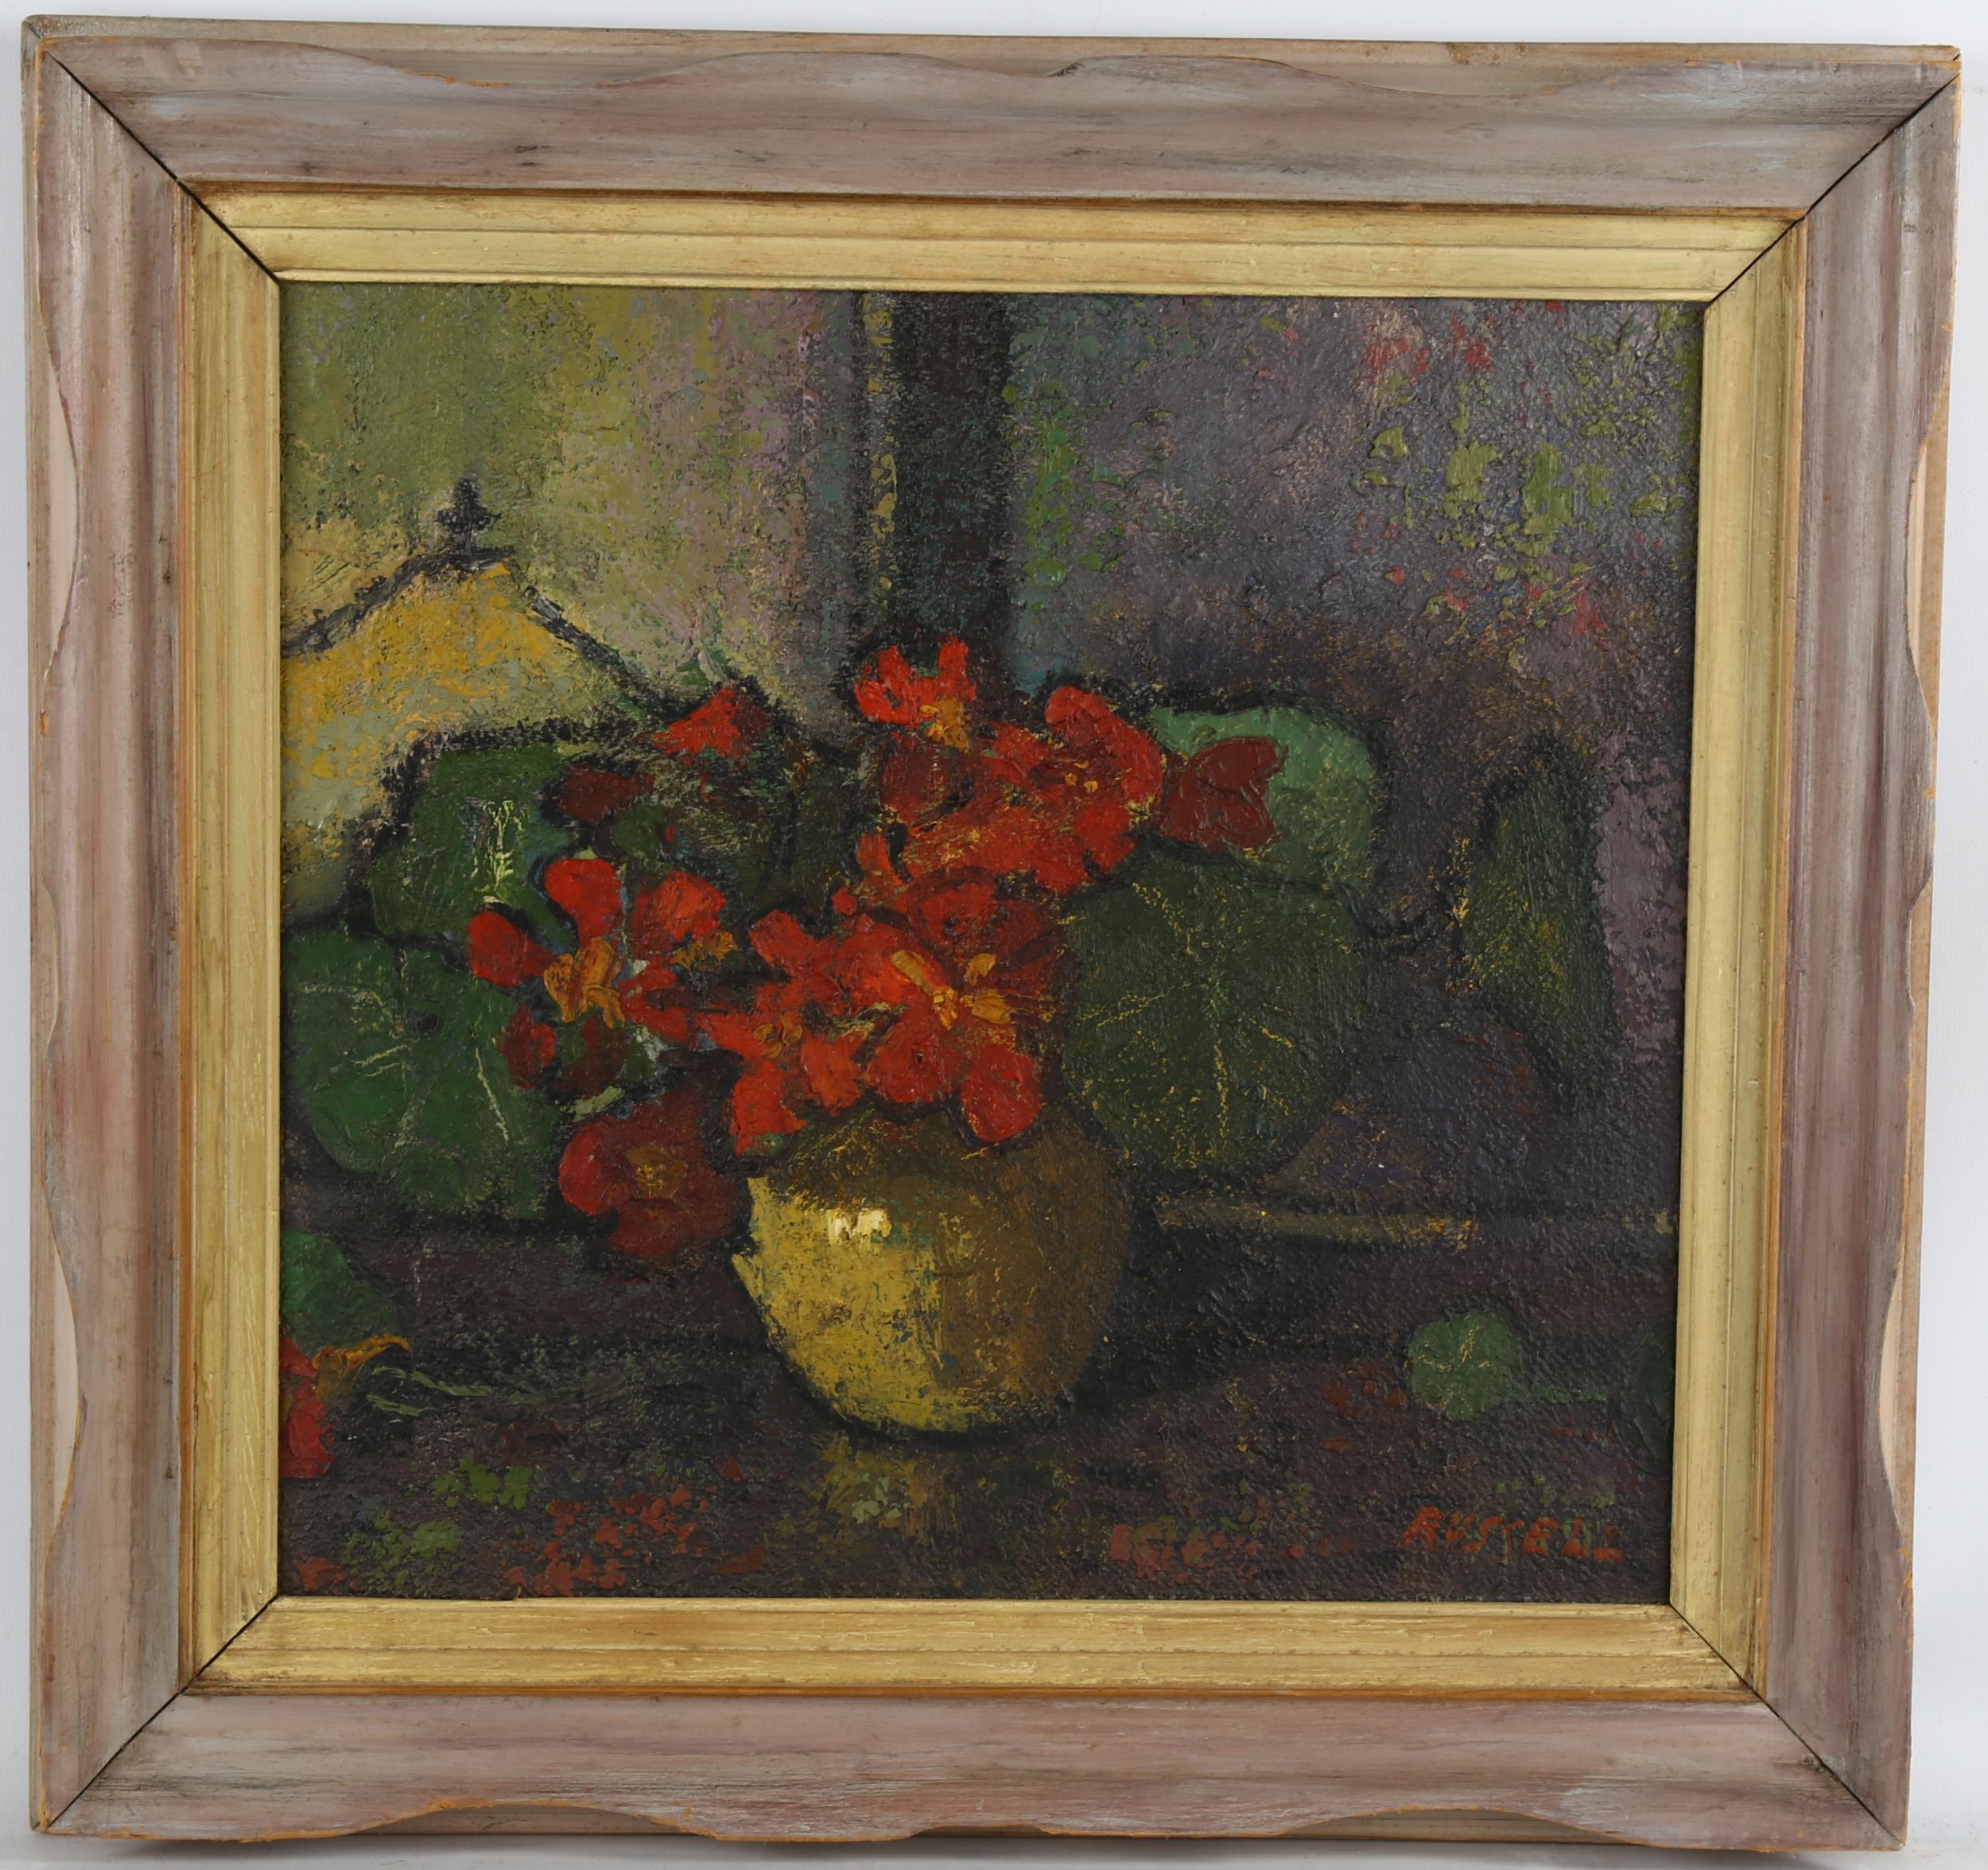 Russell, still life nasturtiums circa 1930, oil on canvas, signed, 34cm x 36cm, framed Good original